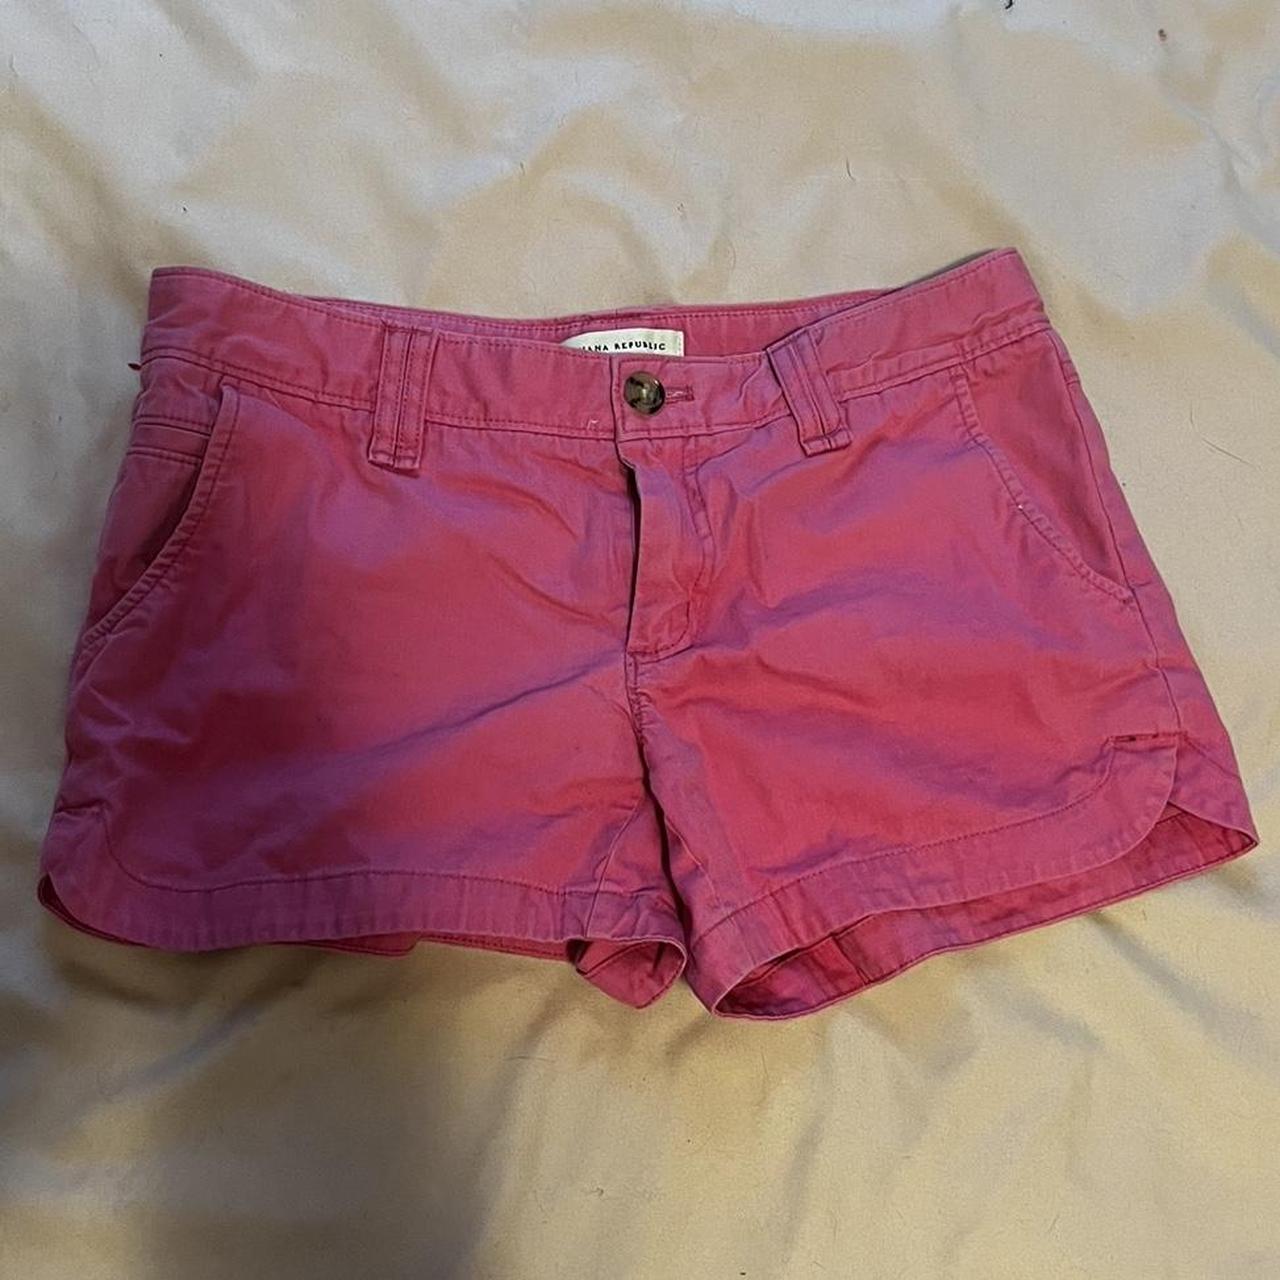 Hot pink banana republic shorts. Size 2 would fit a... - Depop